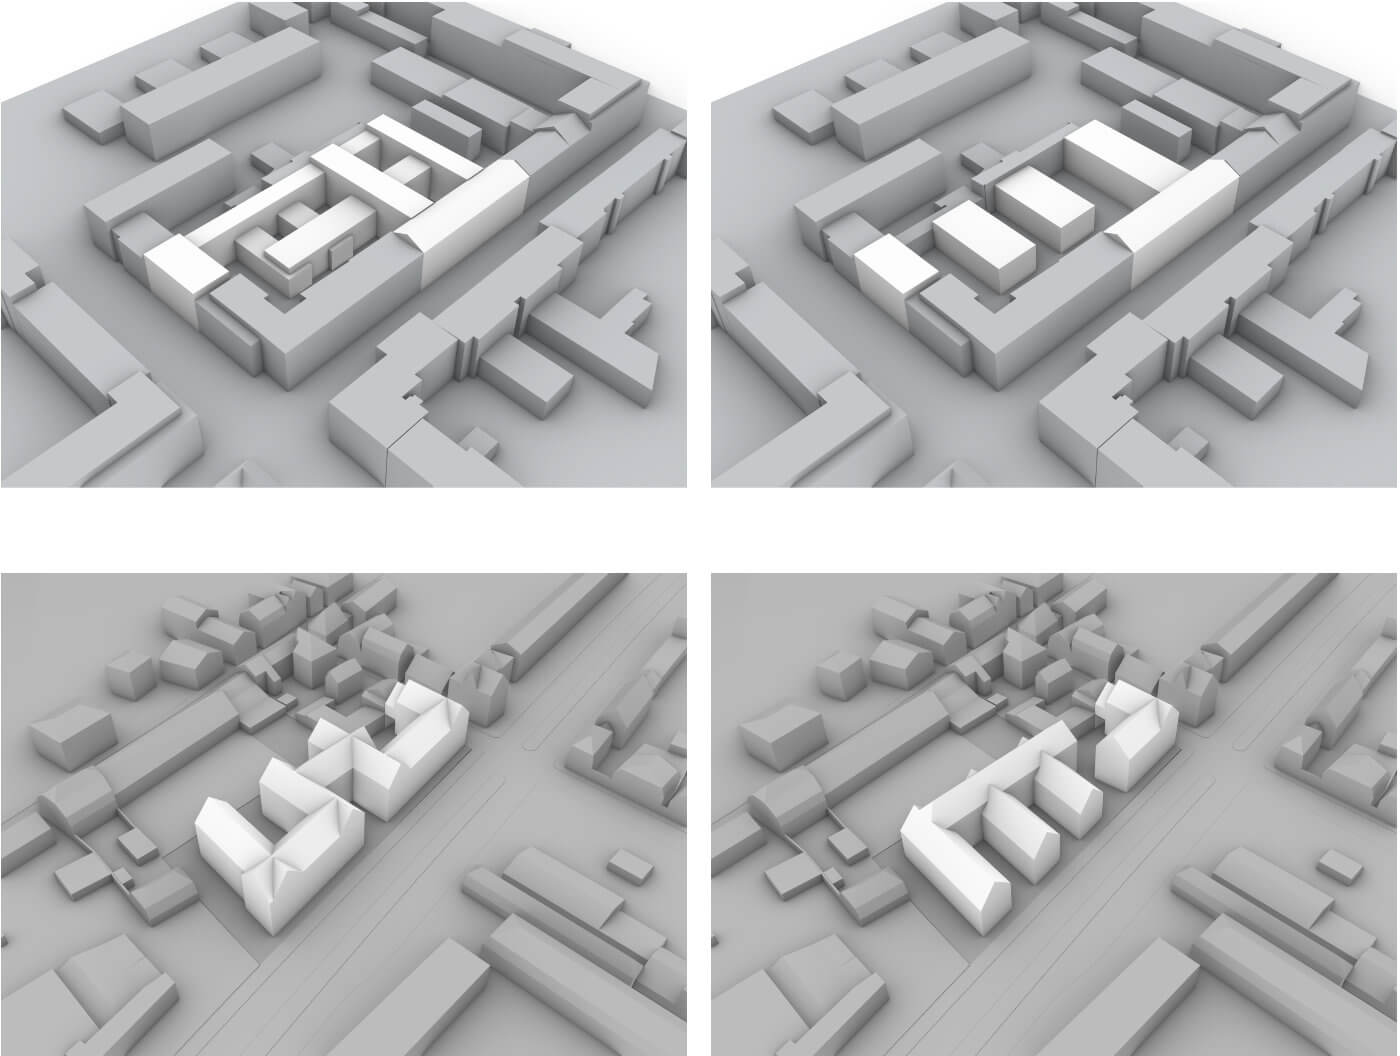 Stadtmodell mit Bauvarianten mit KI